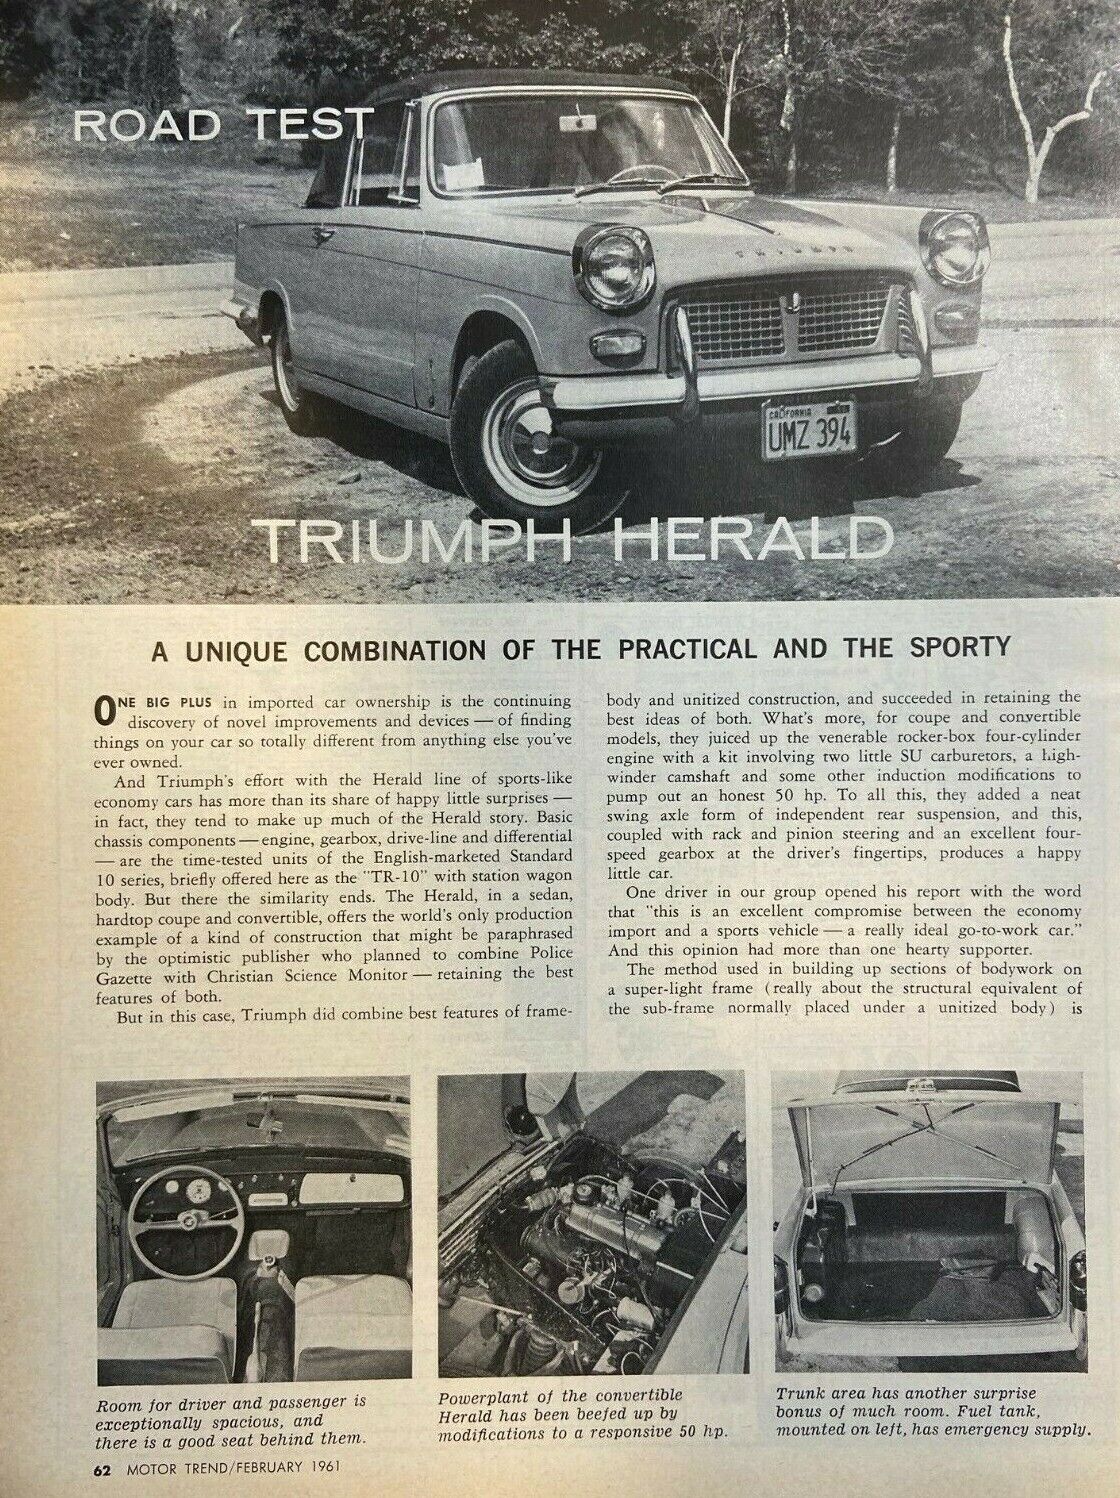 1961 Triumph Herald Road Test illustrated